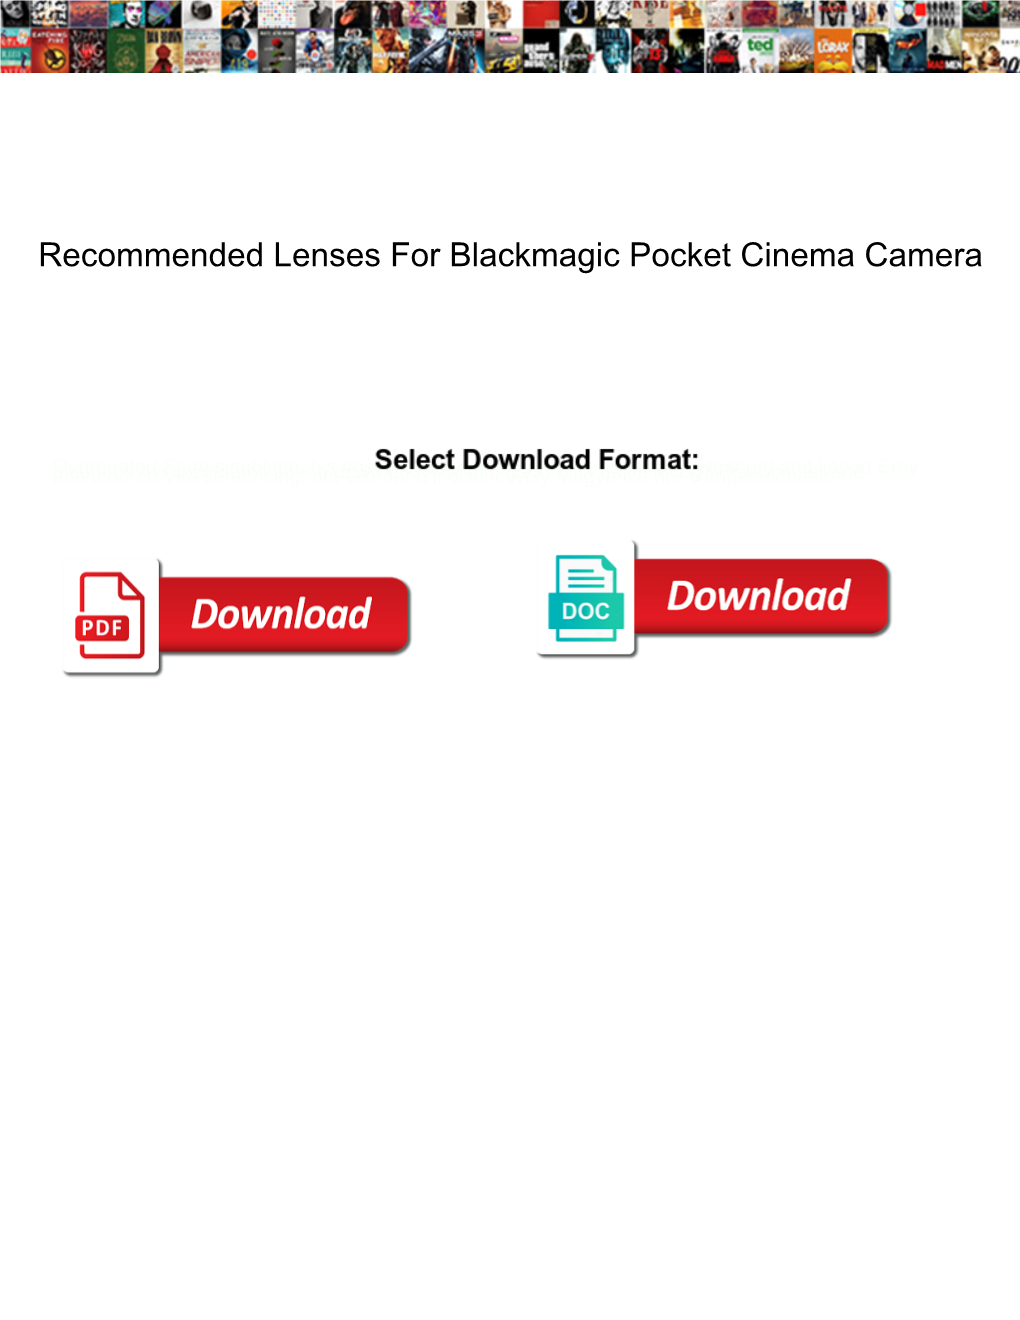 Recommended Lenses for Blackmagic Pocket Cinema Camera